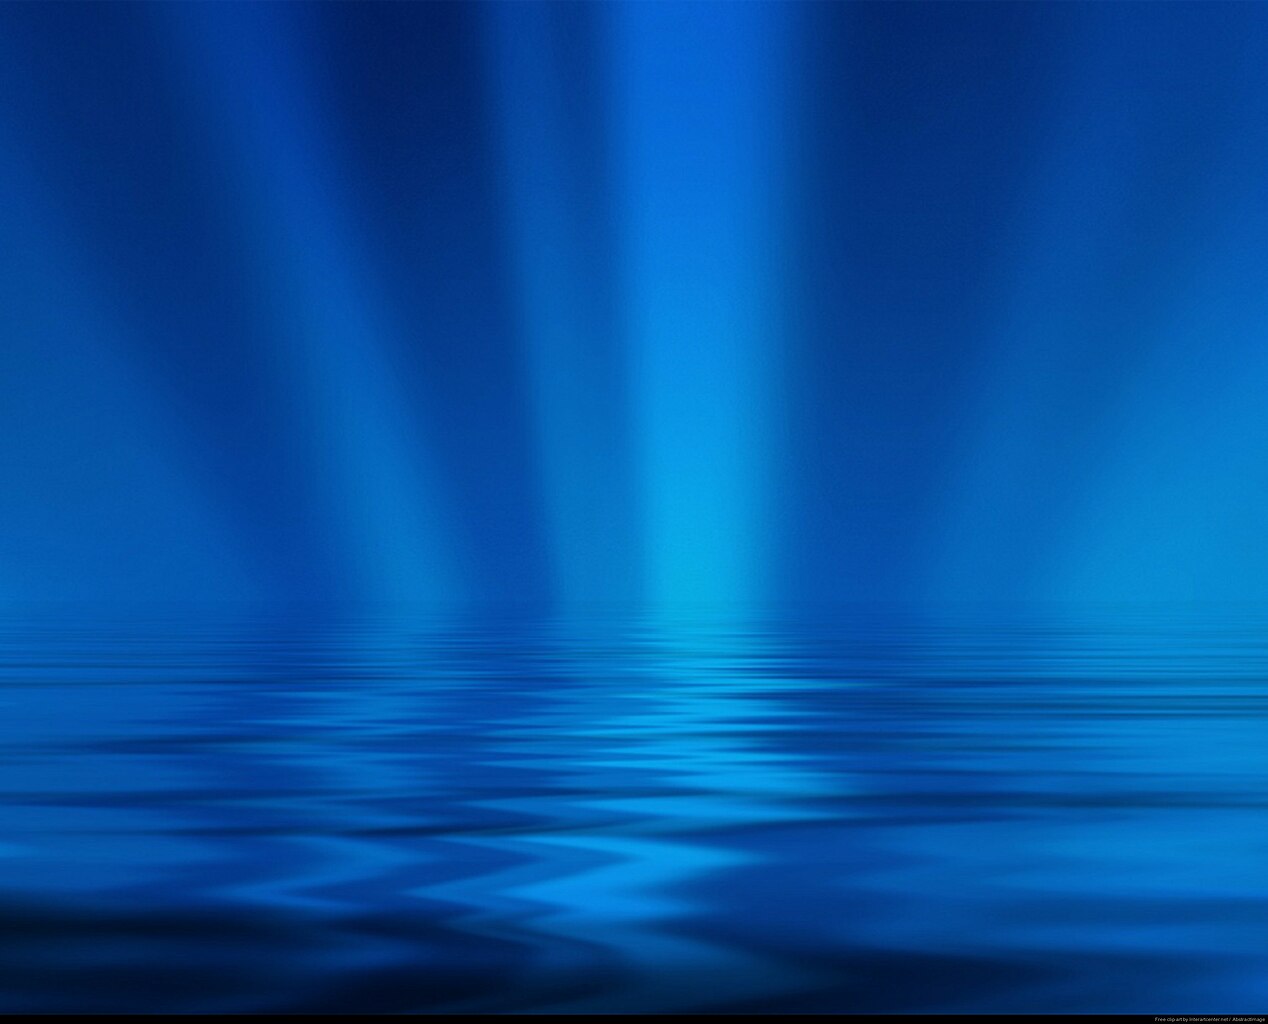 File:Landscape-blue-light-blur-mx.jpg Commons